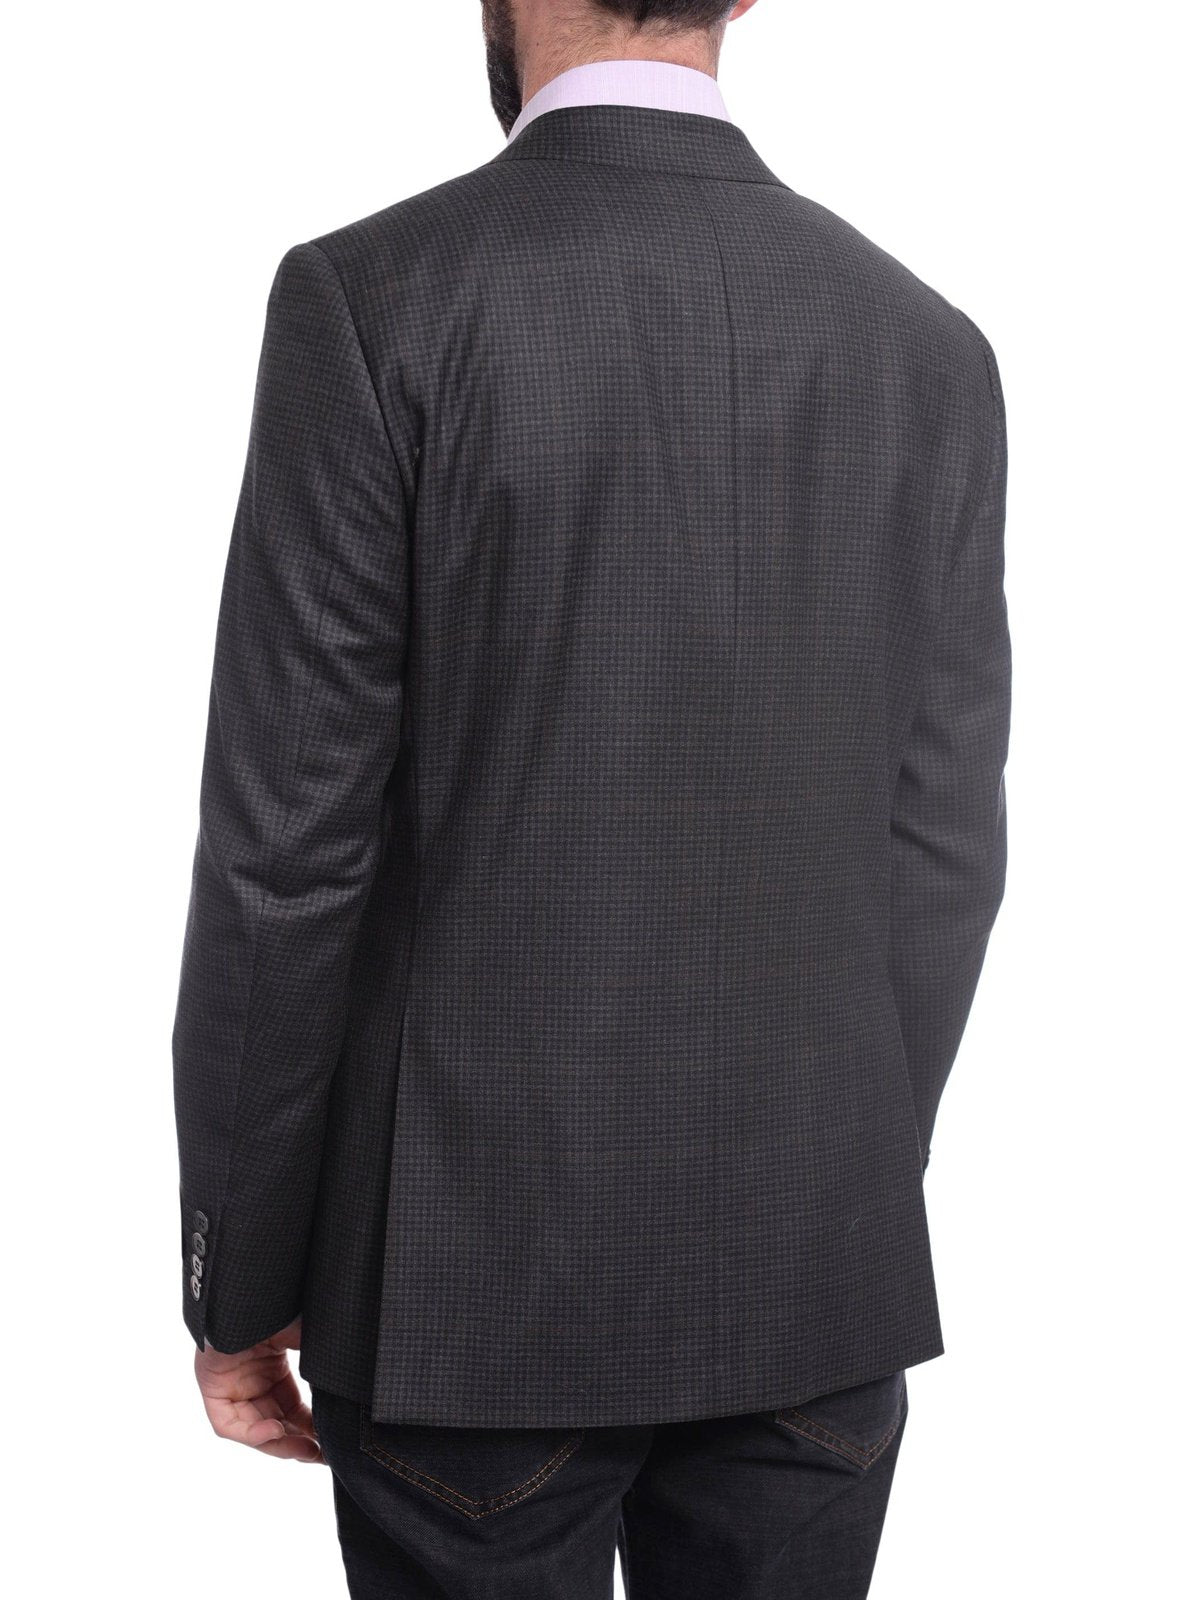 Napoli BLAZERS Napoli Slim Fit Gray Check Half Canvassed Super 150s Wool Blazer Sportcoat